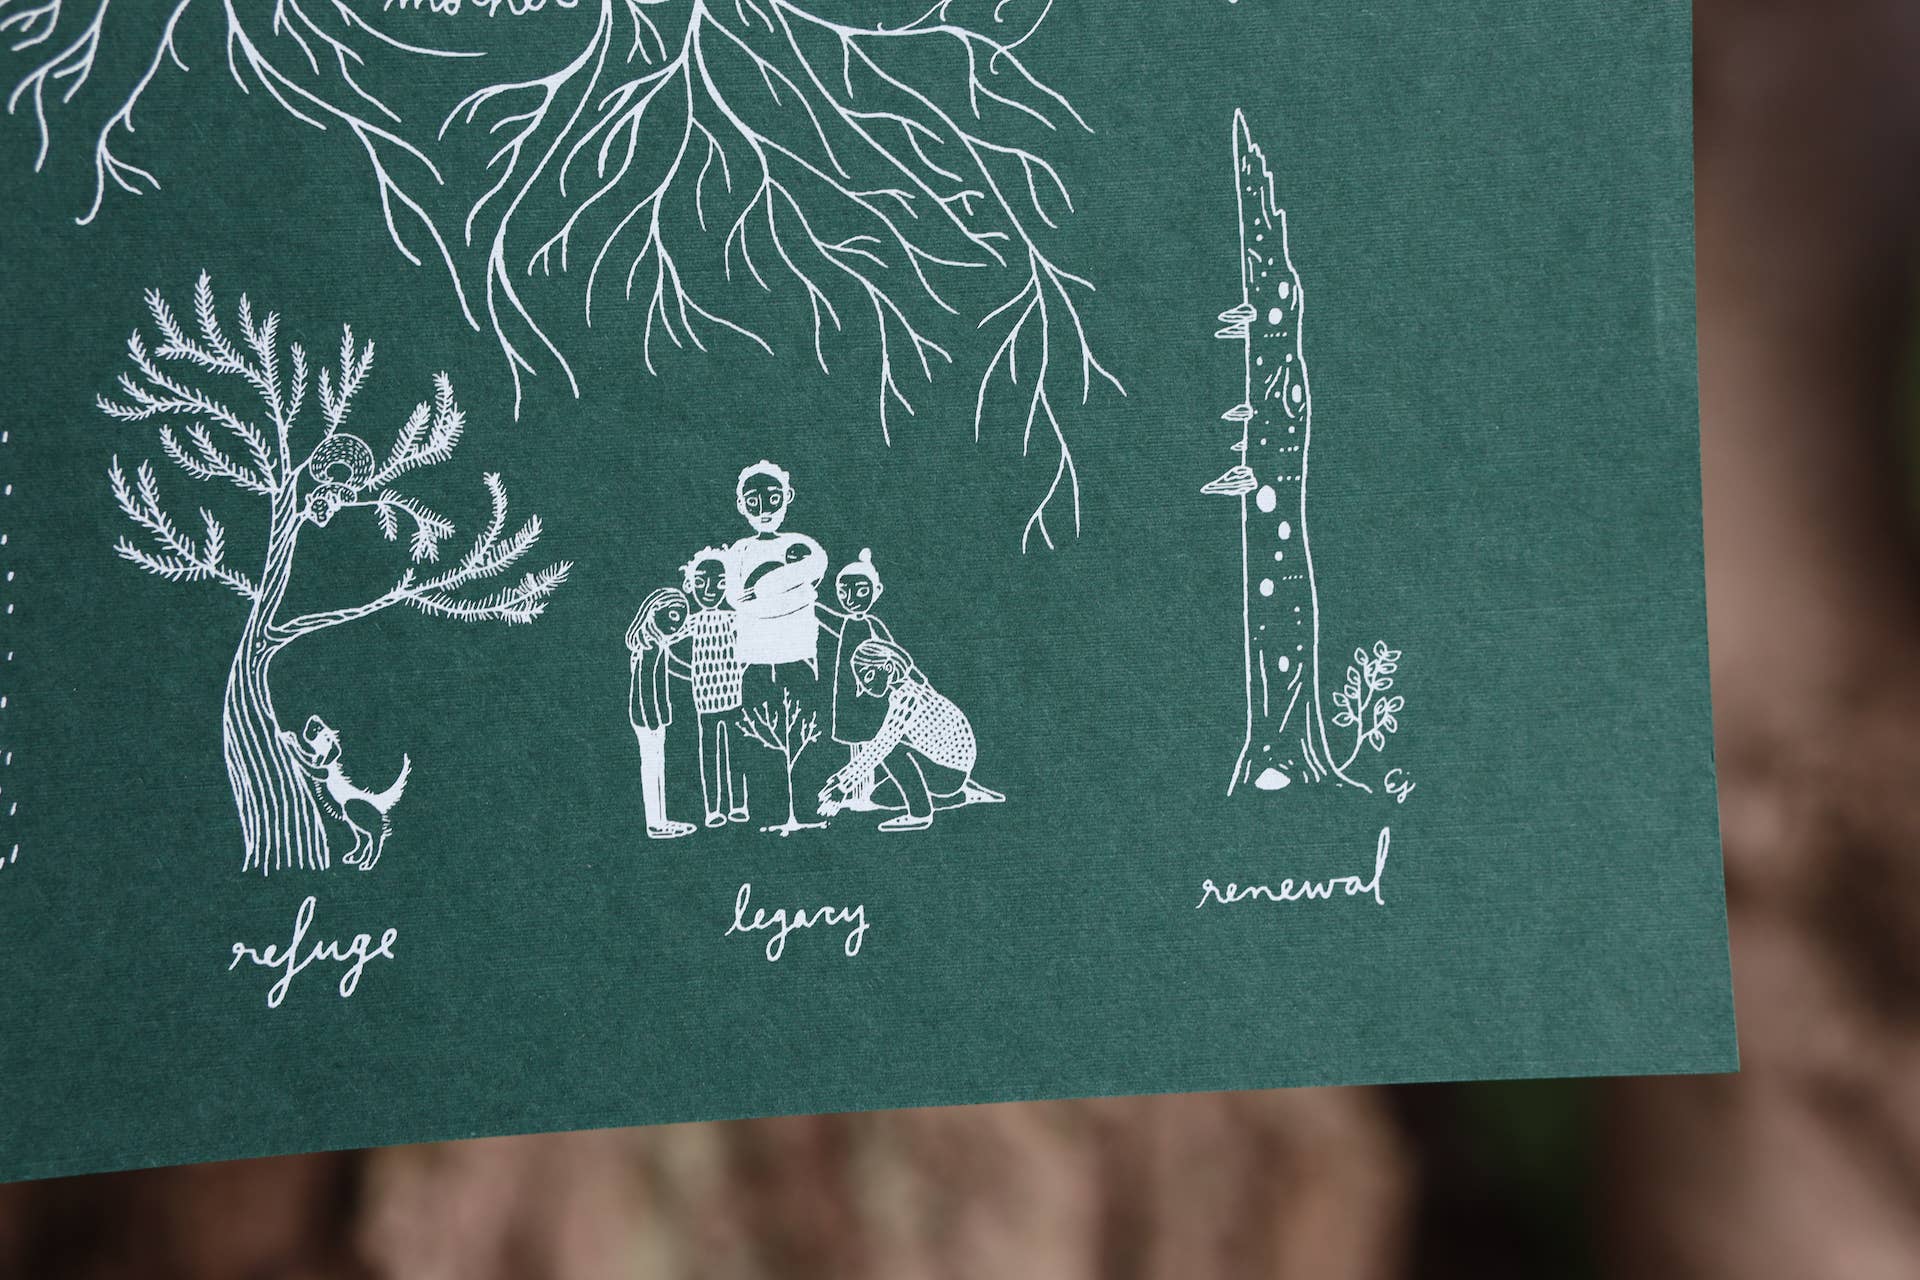 Typology of Trees Print